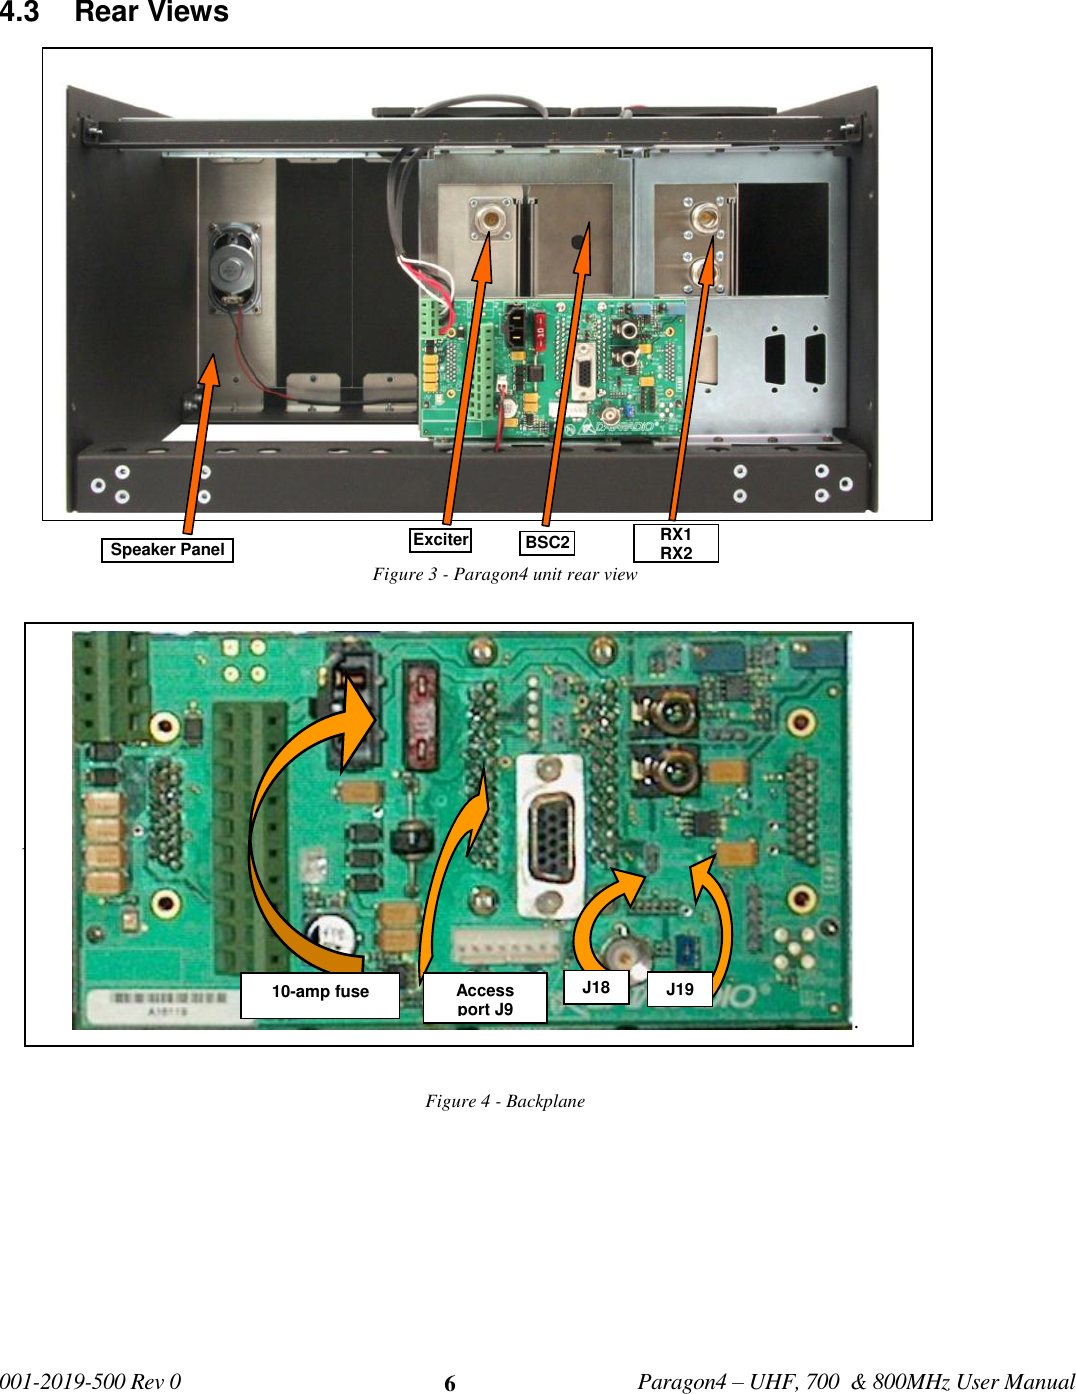   001-2019-500 Rev 0         Paragon4 – UHF, 700  &amp; 800MHz User Manual     6 4.3  Rear Views Figure 3 - Paragon4 unit rear view  Figure 4 - Backplane     RX1 RX2 BSC2 Exciter Speaker Panel       .      10-amp fuse J18 Access  port J9 J19 